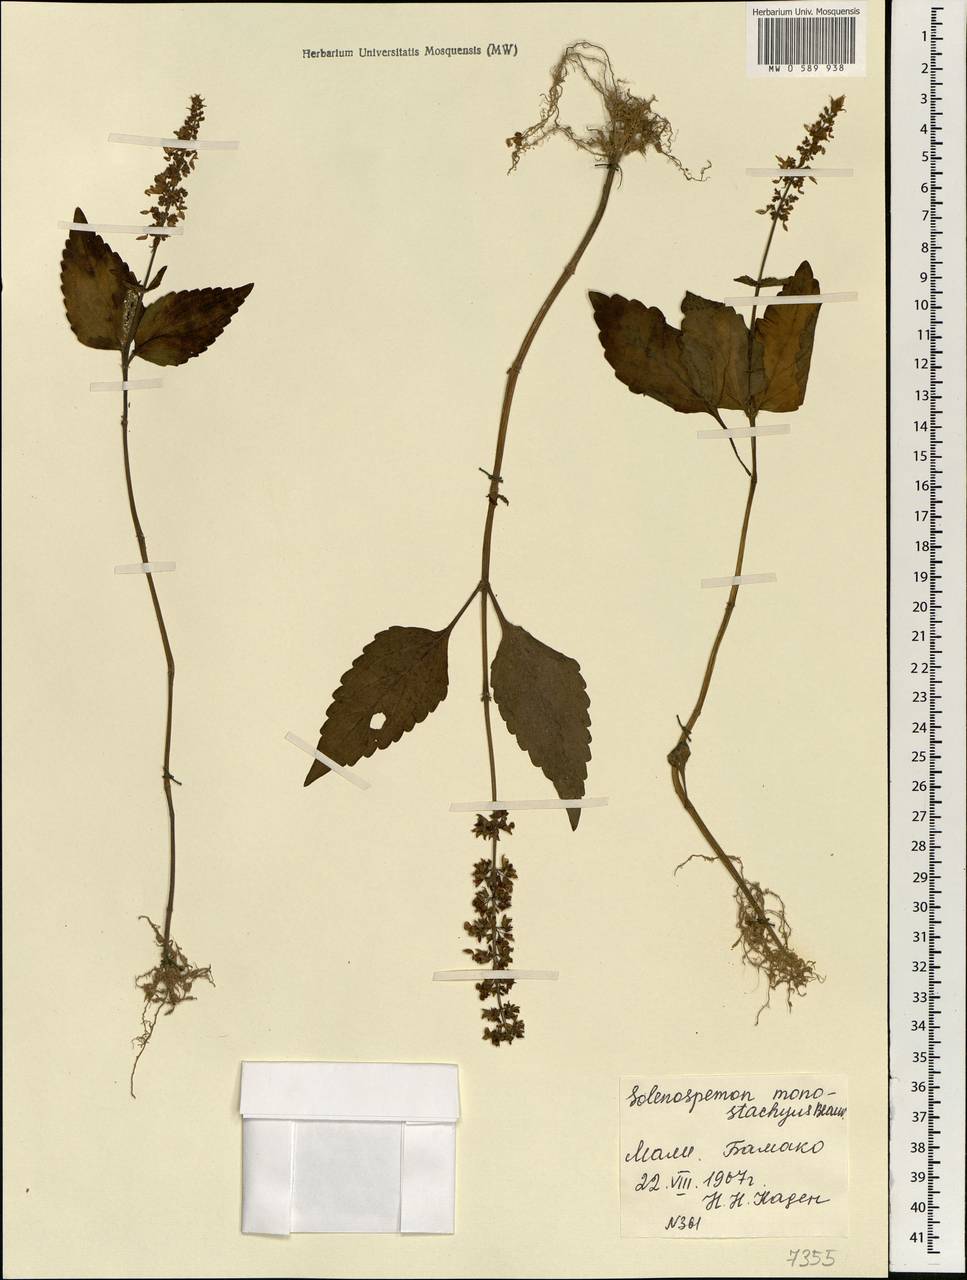 Plectranthus monostachyus (P.Beauv.) B.J.Pollard, Africa (AFR) (Mali)